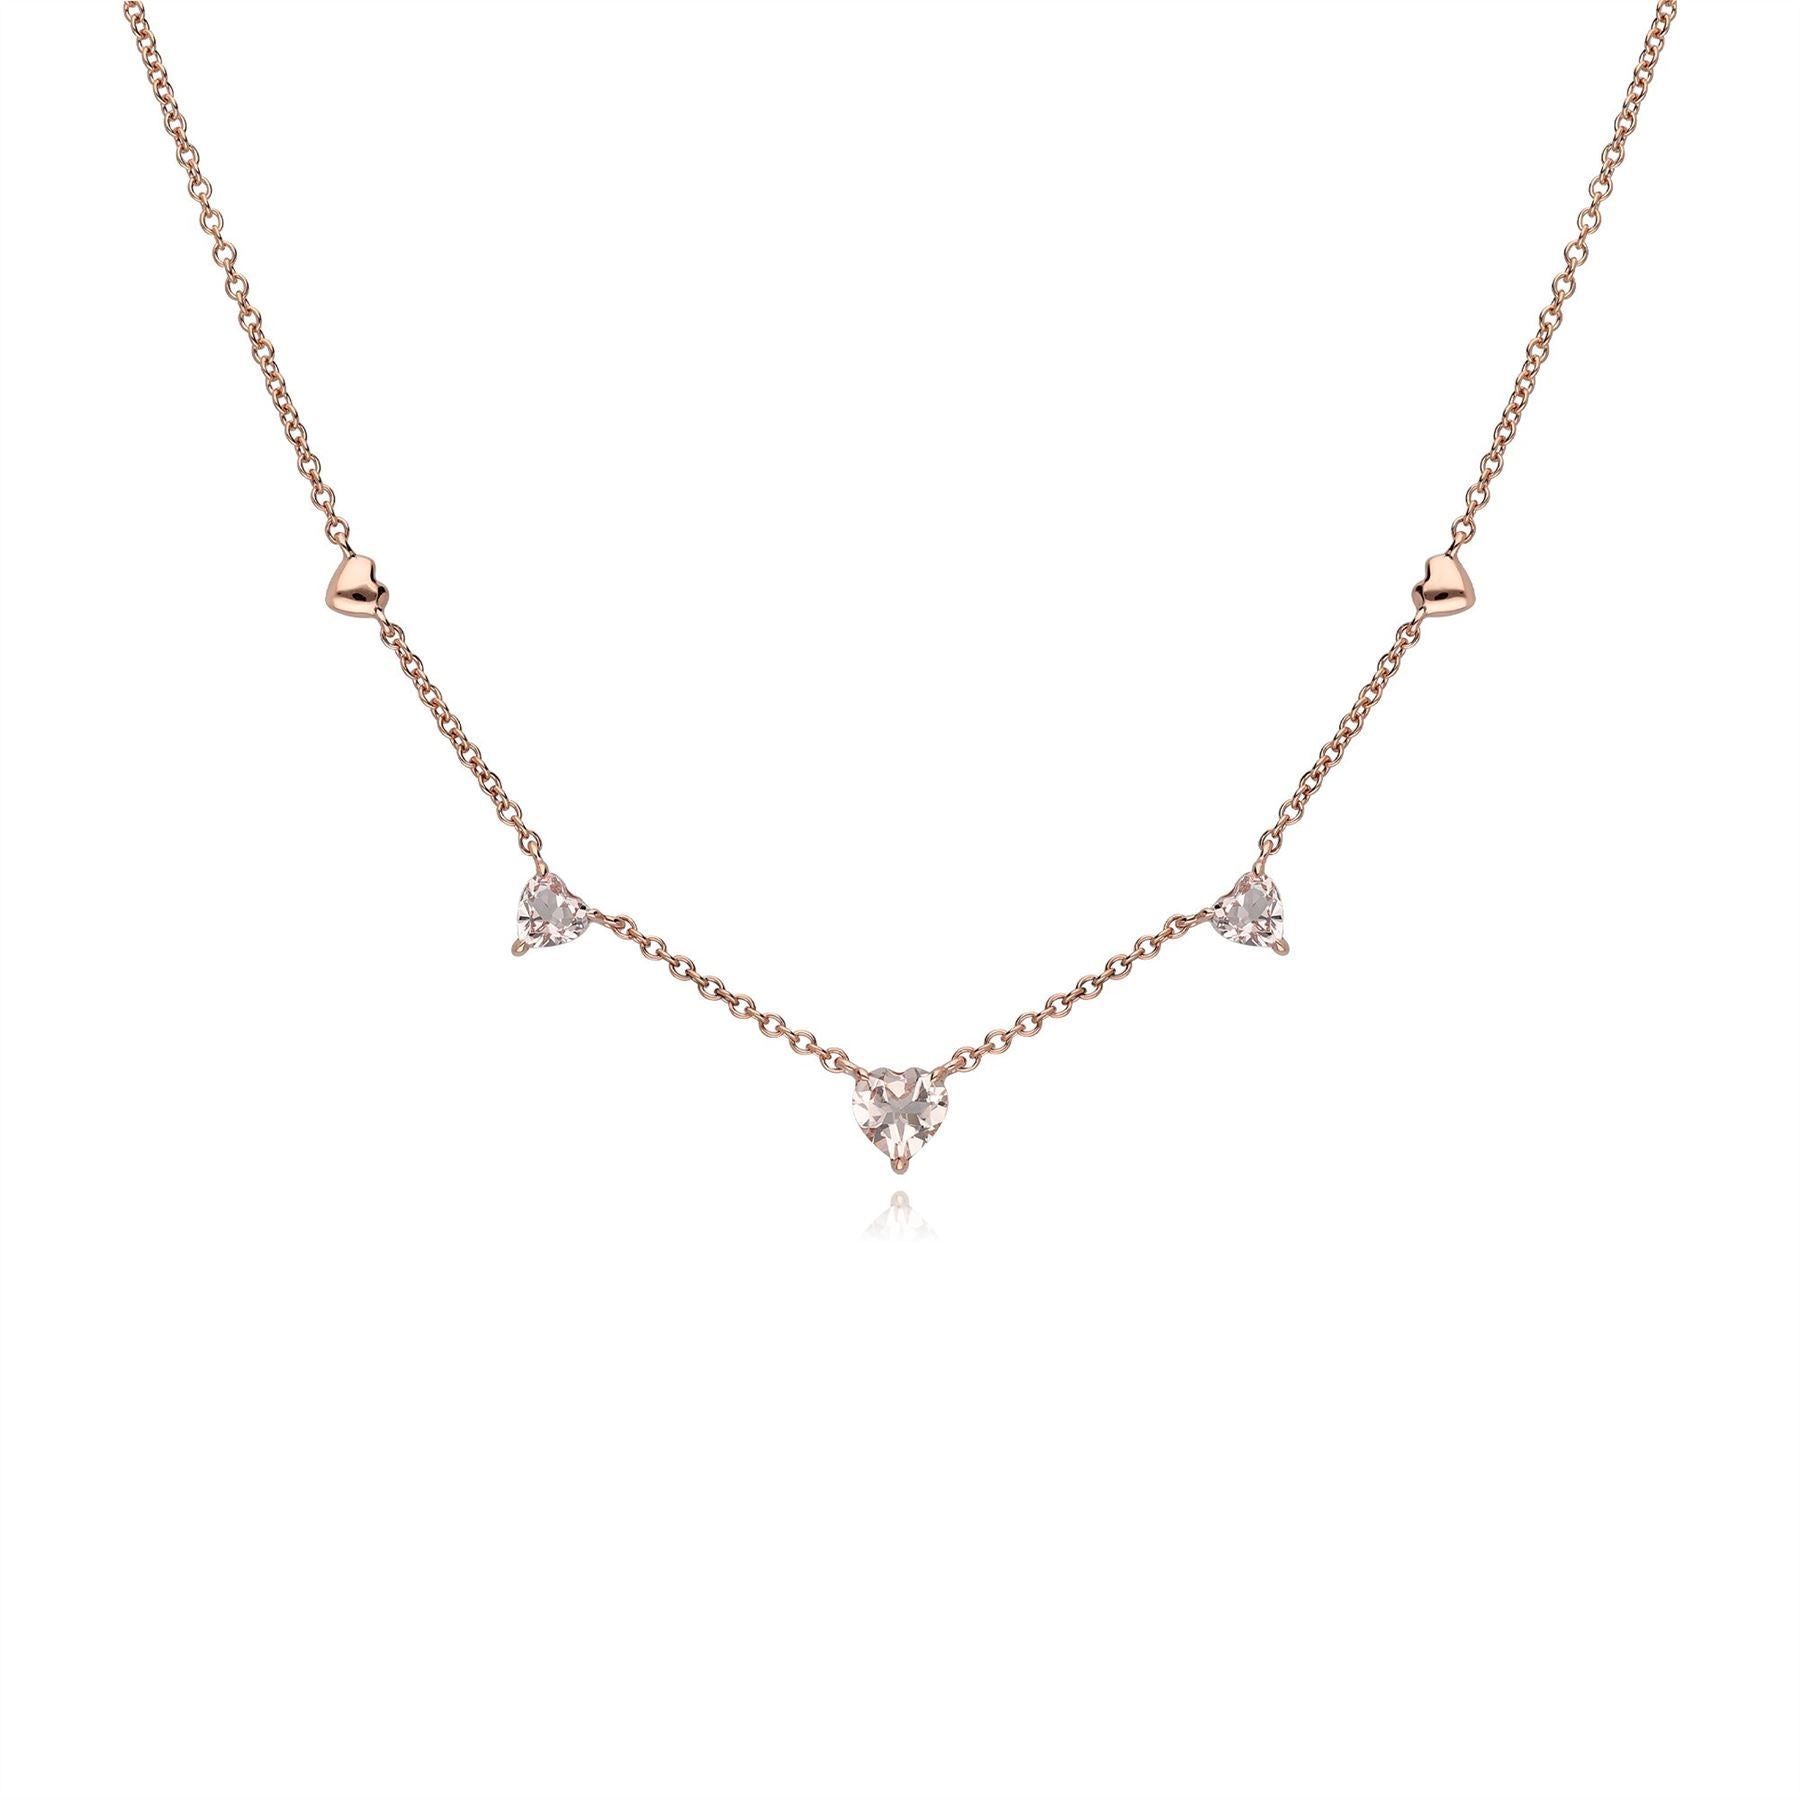 Gemondo Pink Morganite Gemstone Love Heart Necklace in 9ct Rose Gold